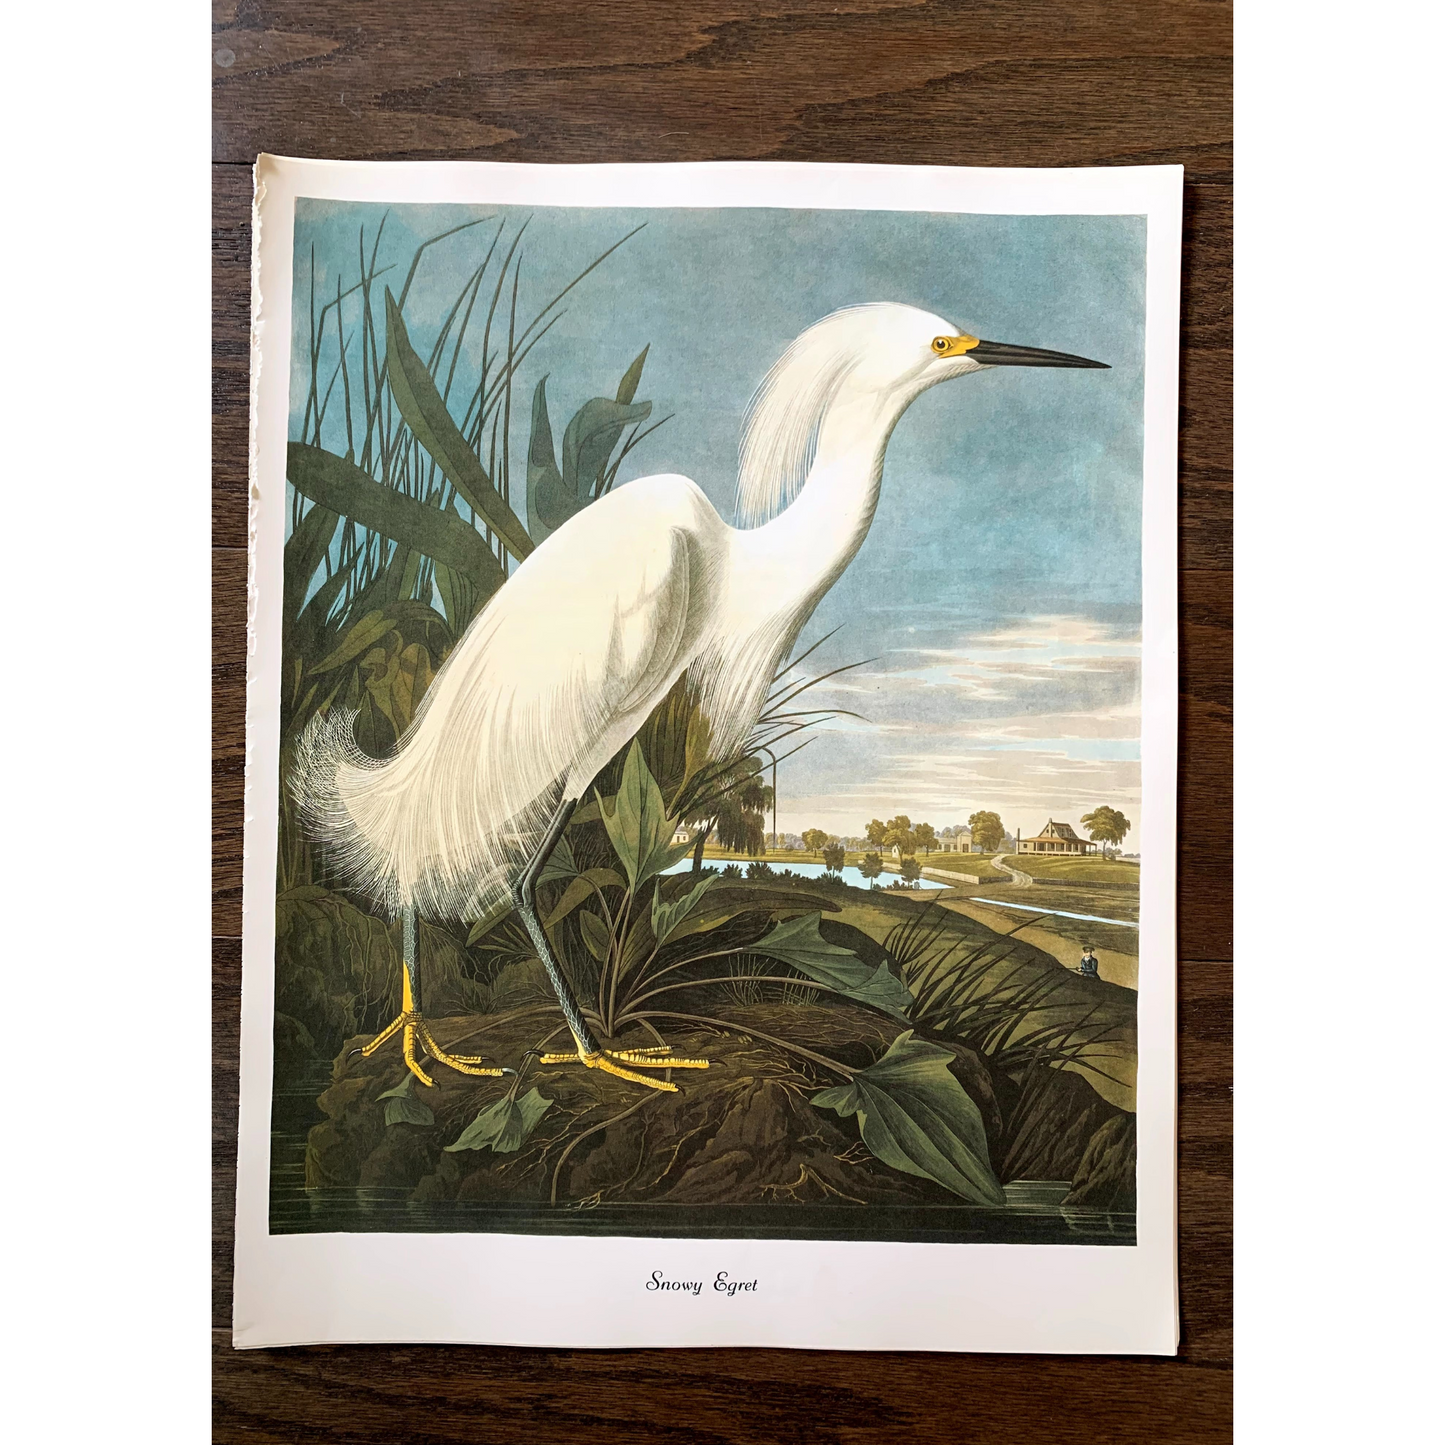 True Vintage Audubon Birds Prints, Authentic Old Book Plates for Framing, Bird Art Set